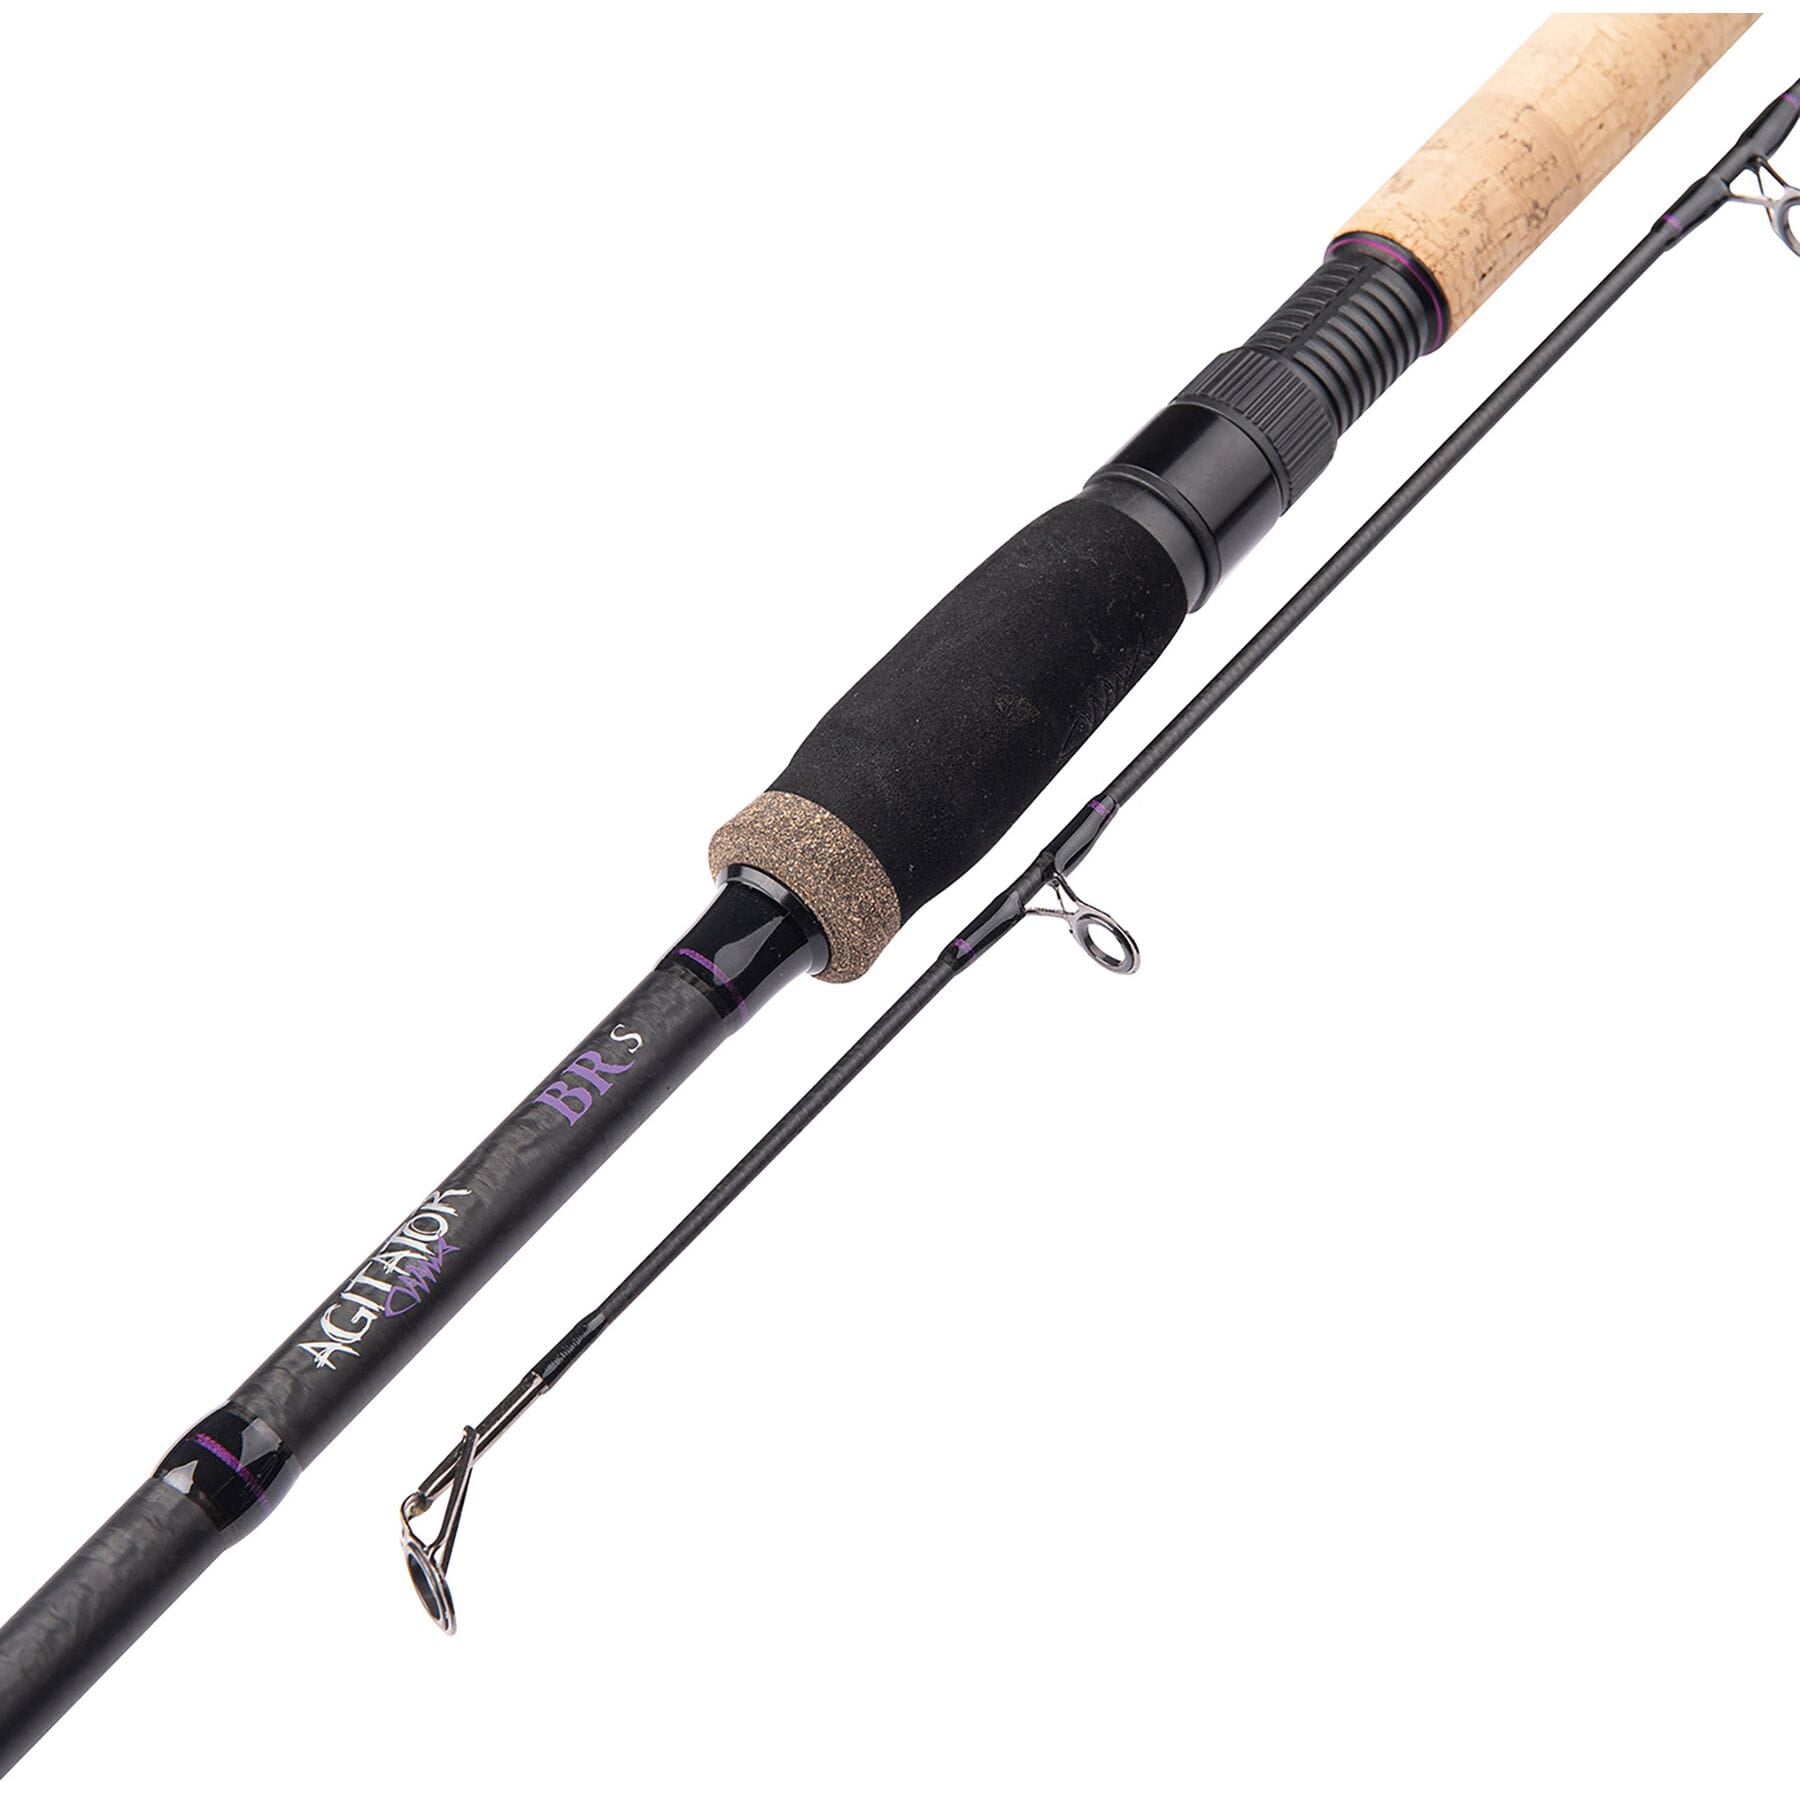 Drennan Esox 7ft Lureflex Rod Review: Unmatched Pike Fishing